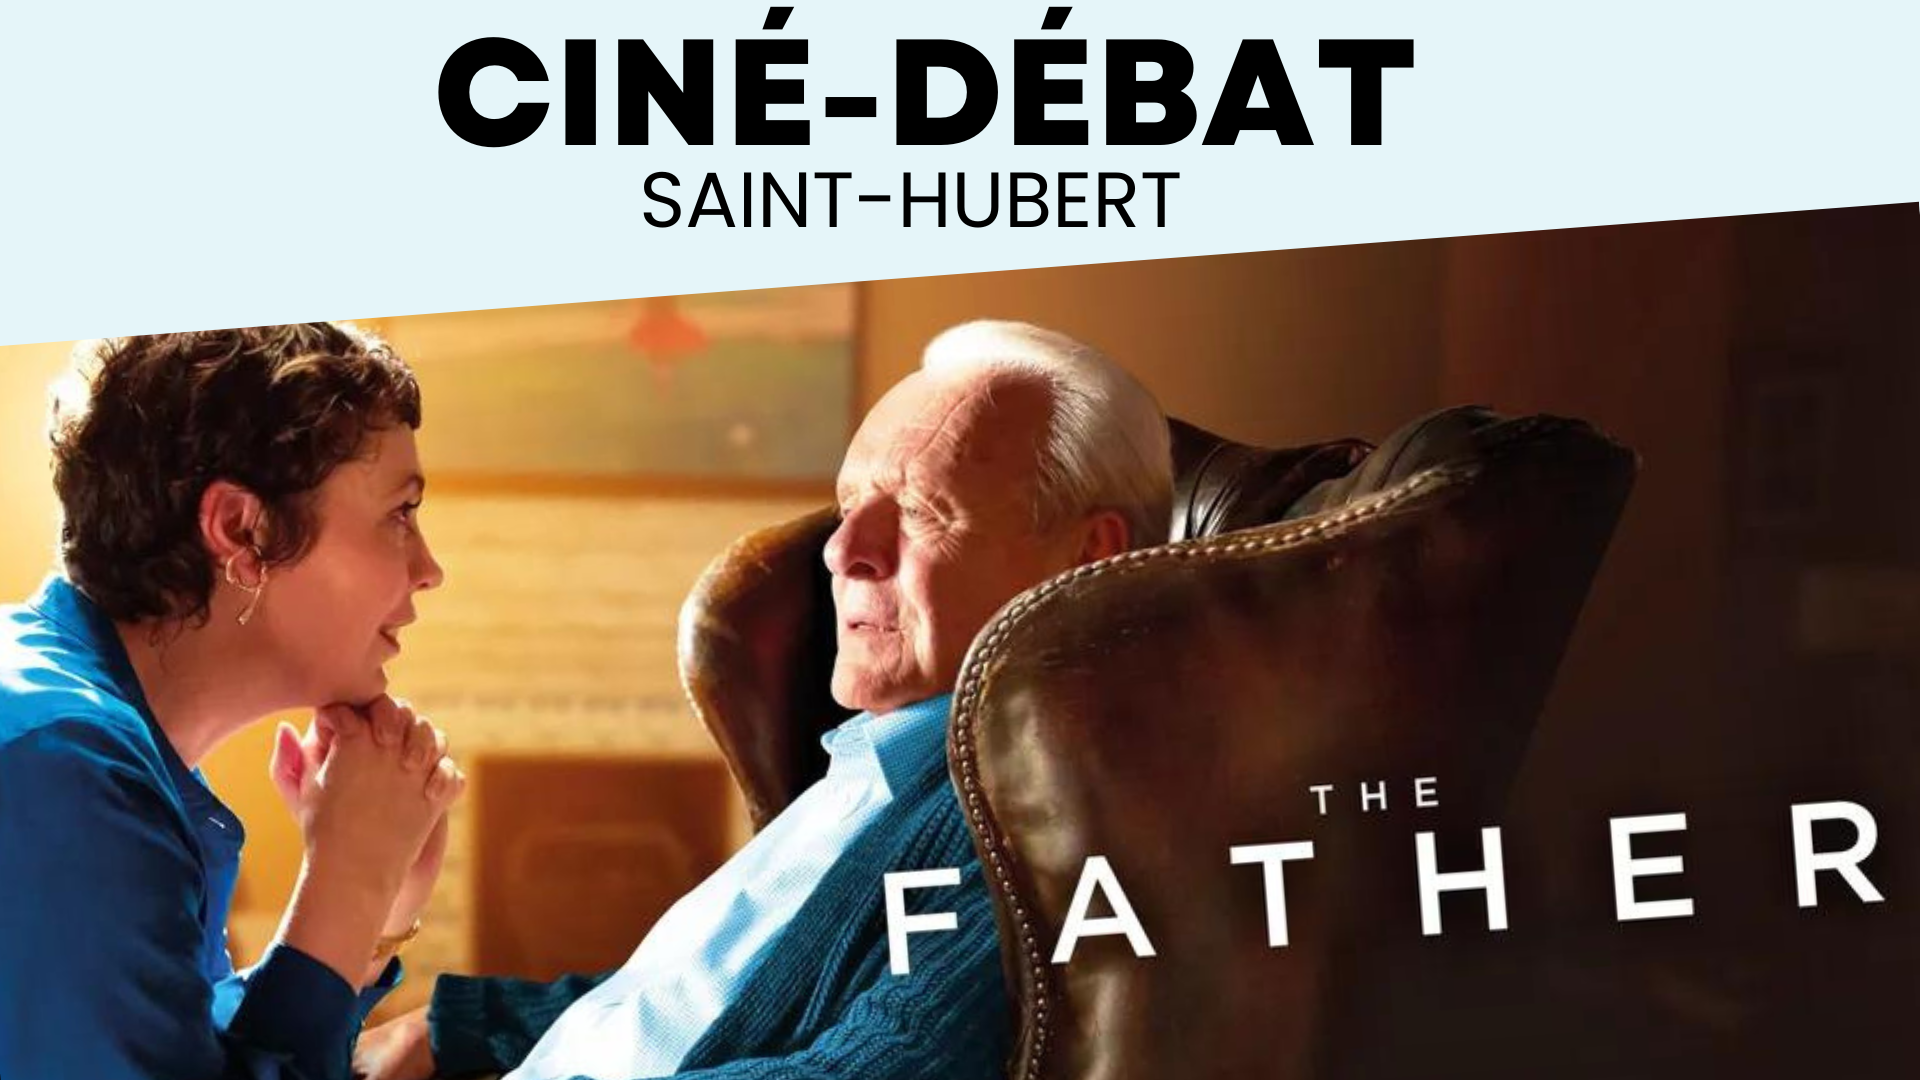 Cine debat st hubert the father